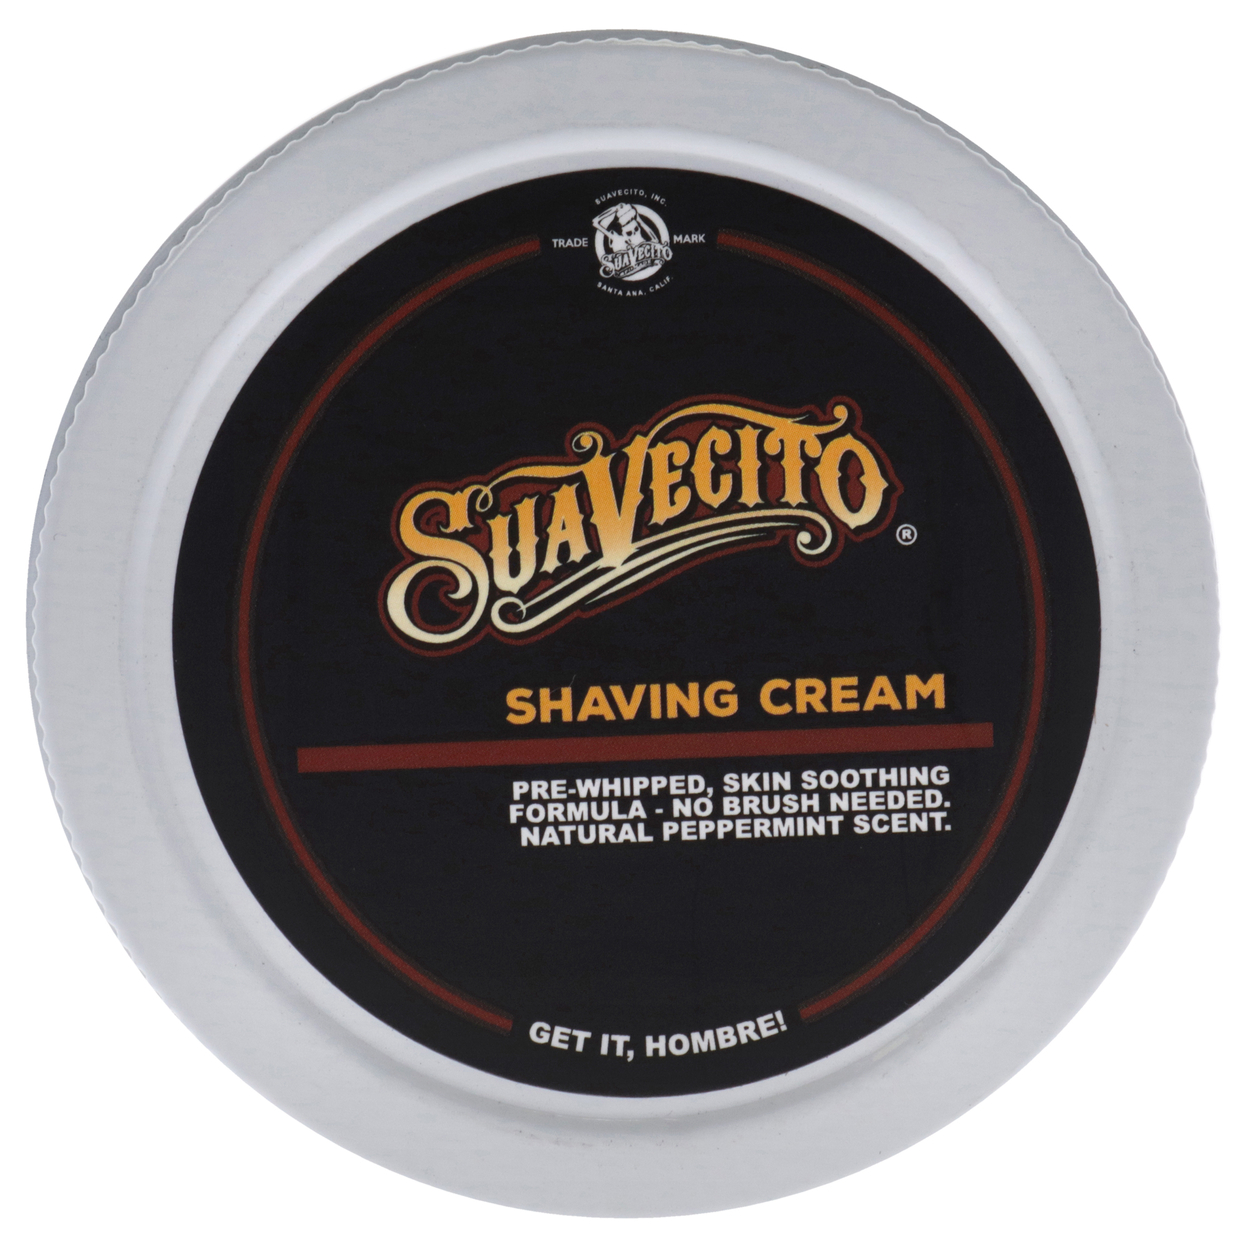 Suavecito Shaving Creme Cream 8 Oz